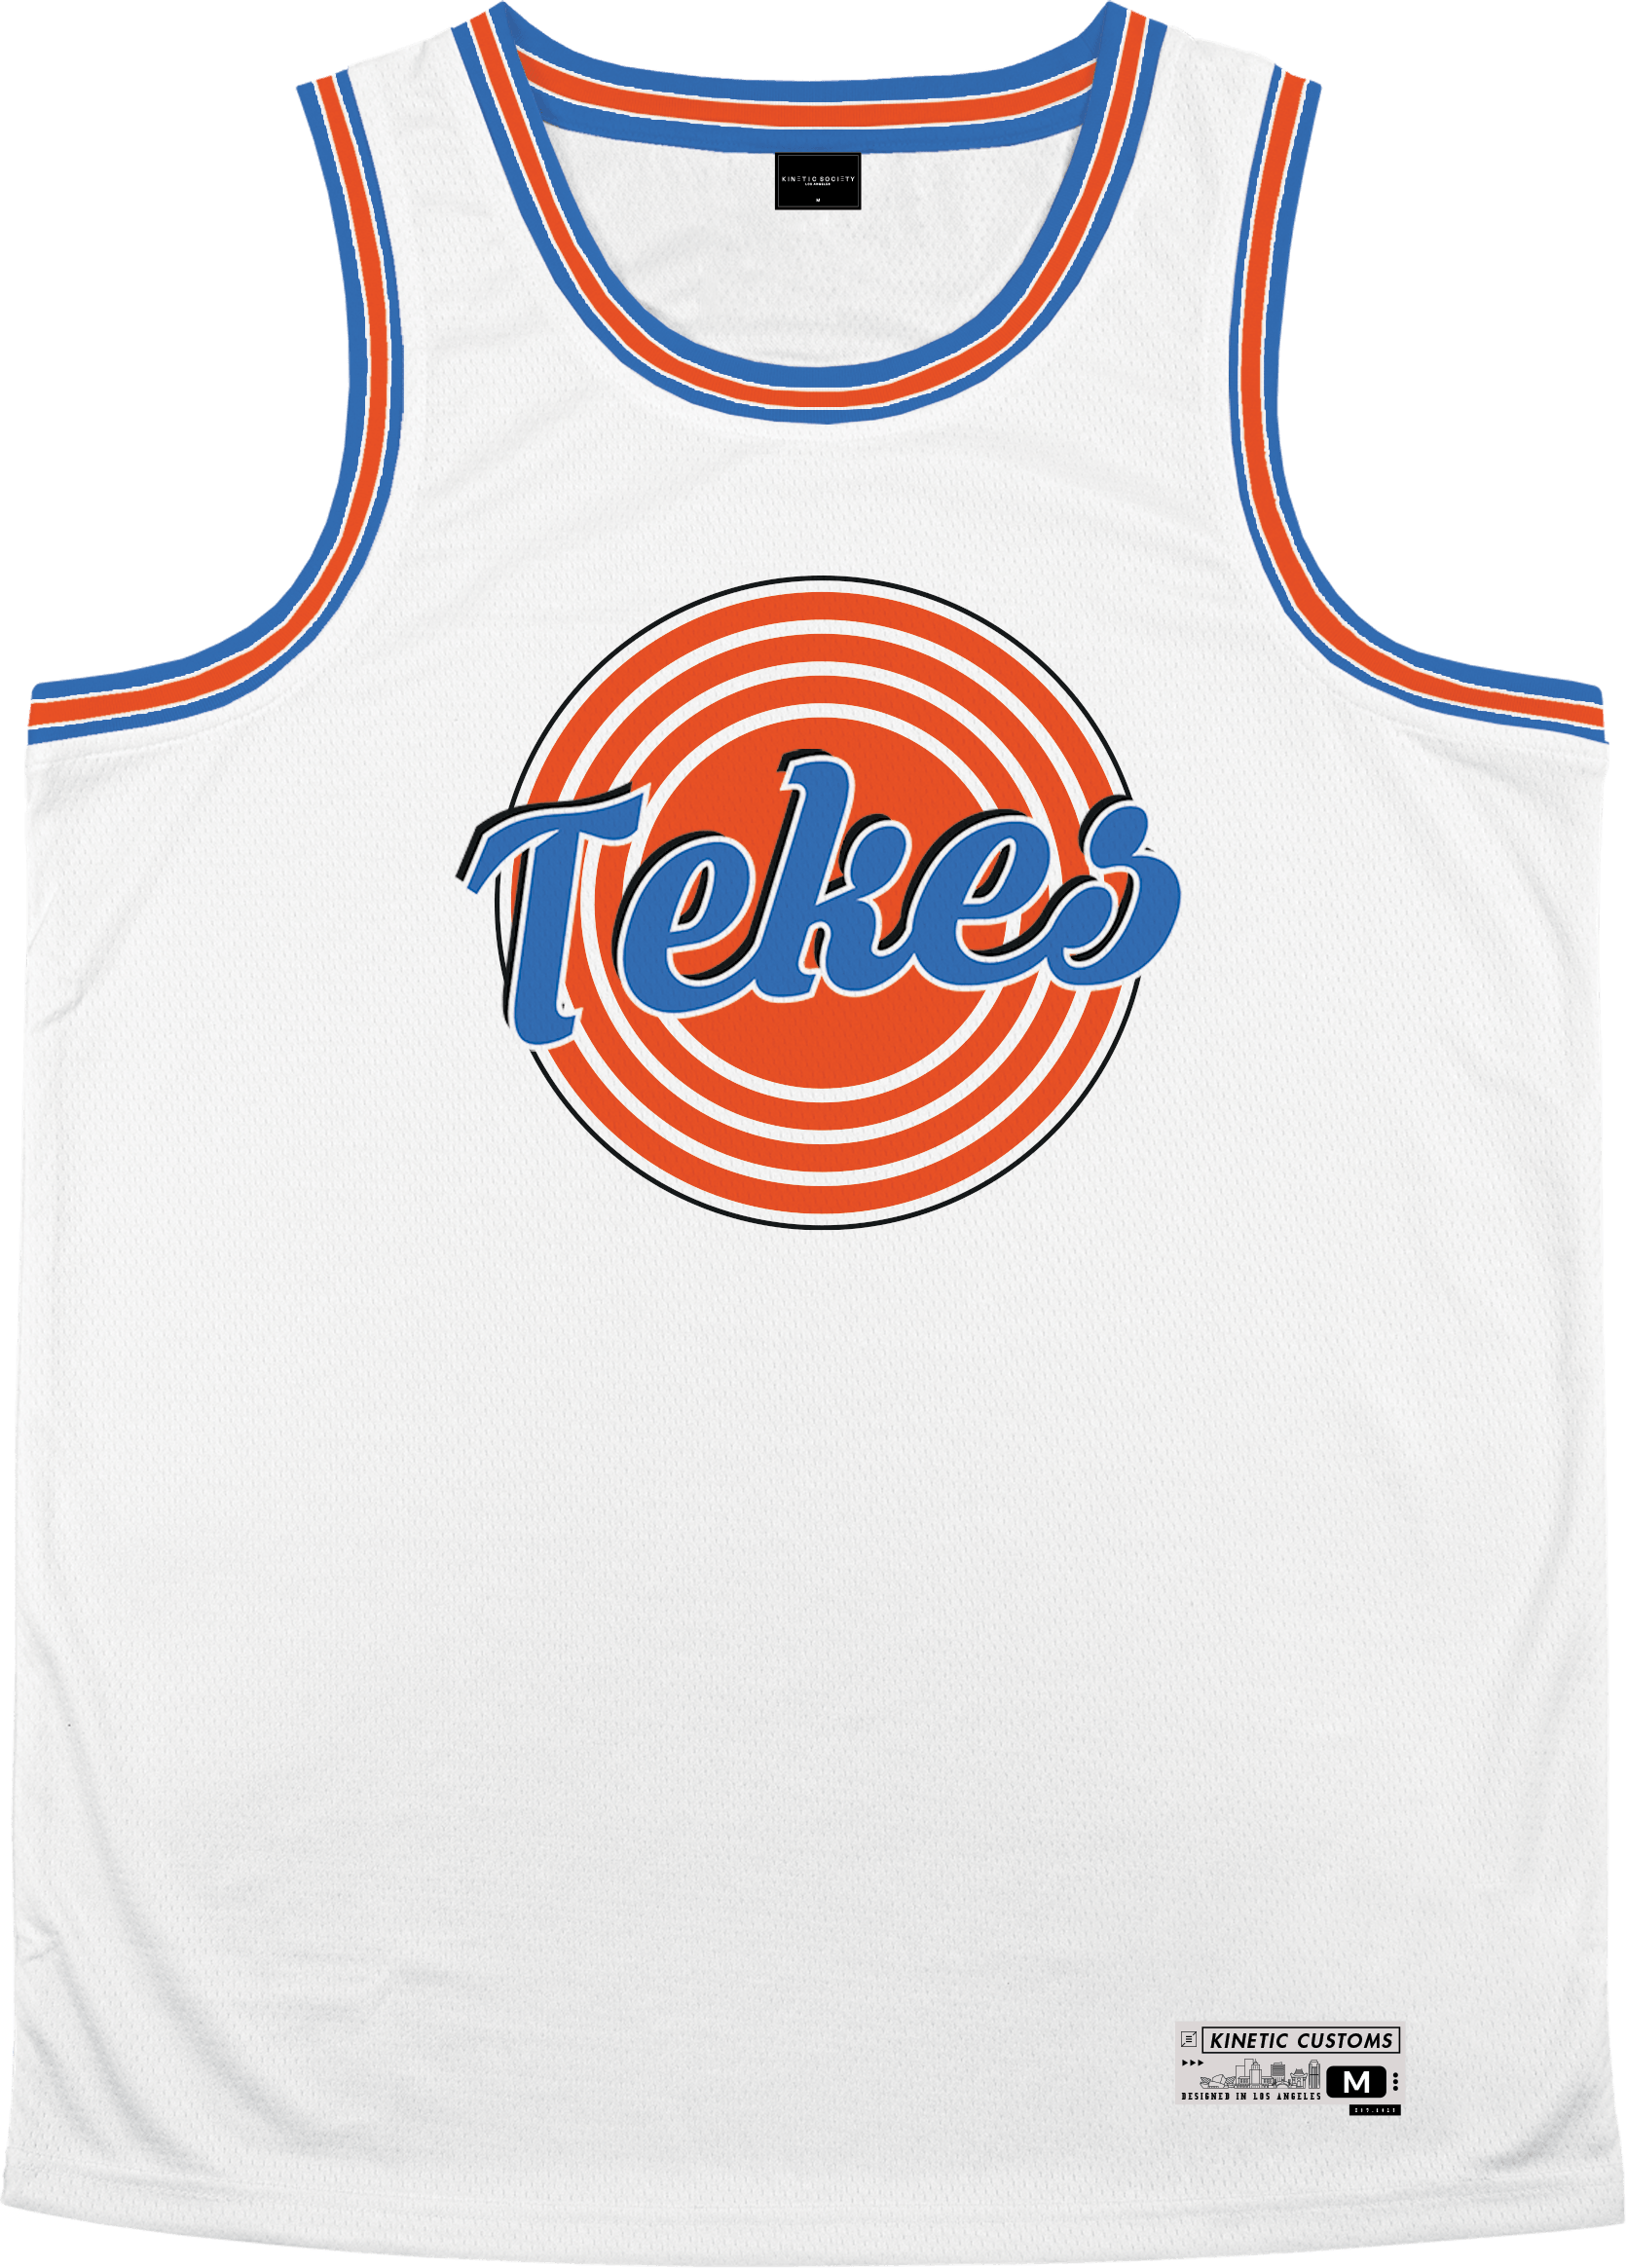 Tau Kappa Epsilon - Vintage Basketball Jersey - Kinetic Society